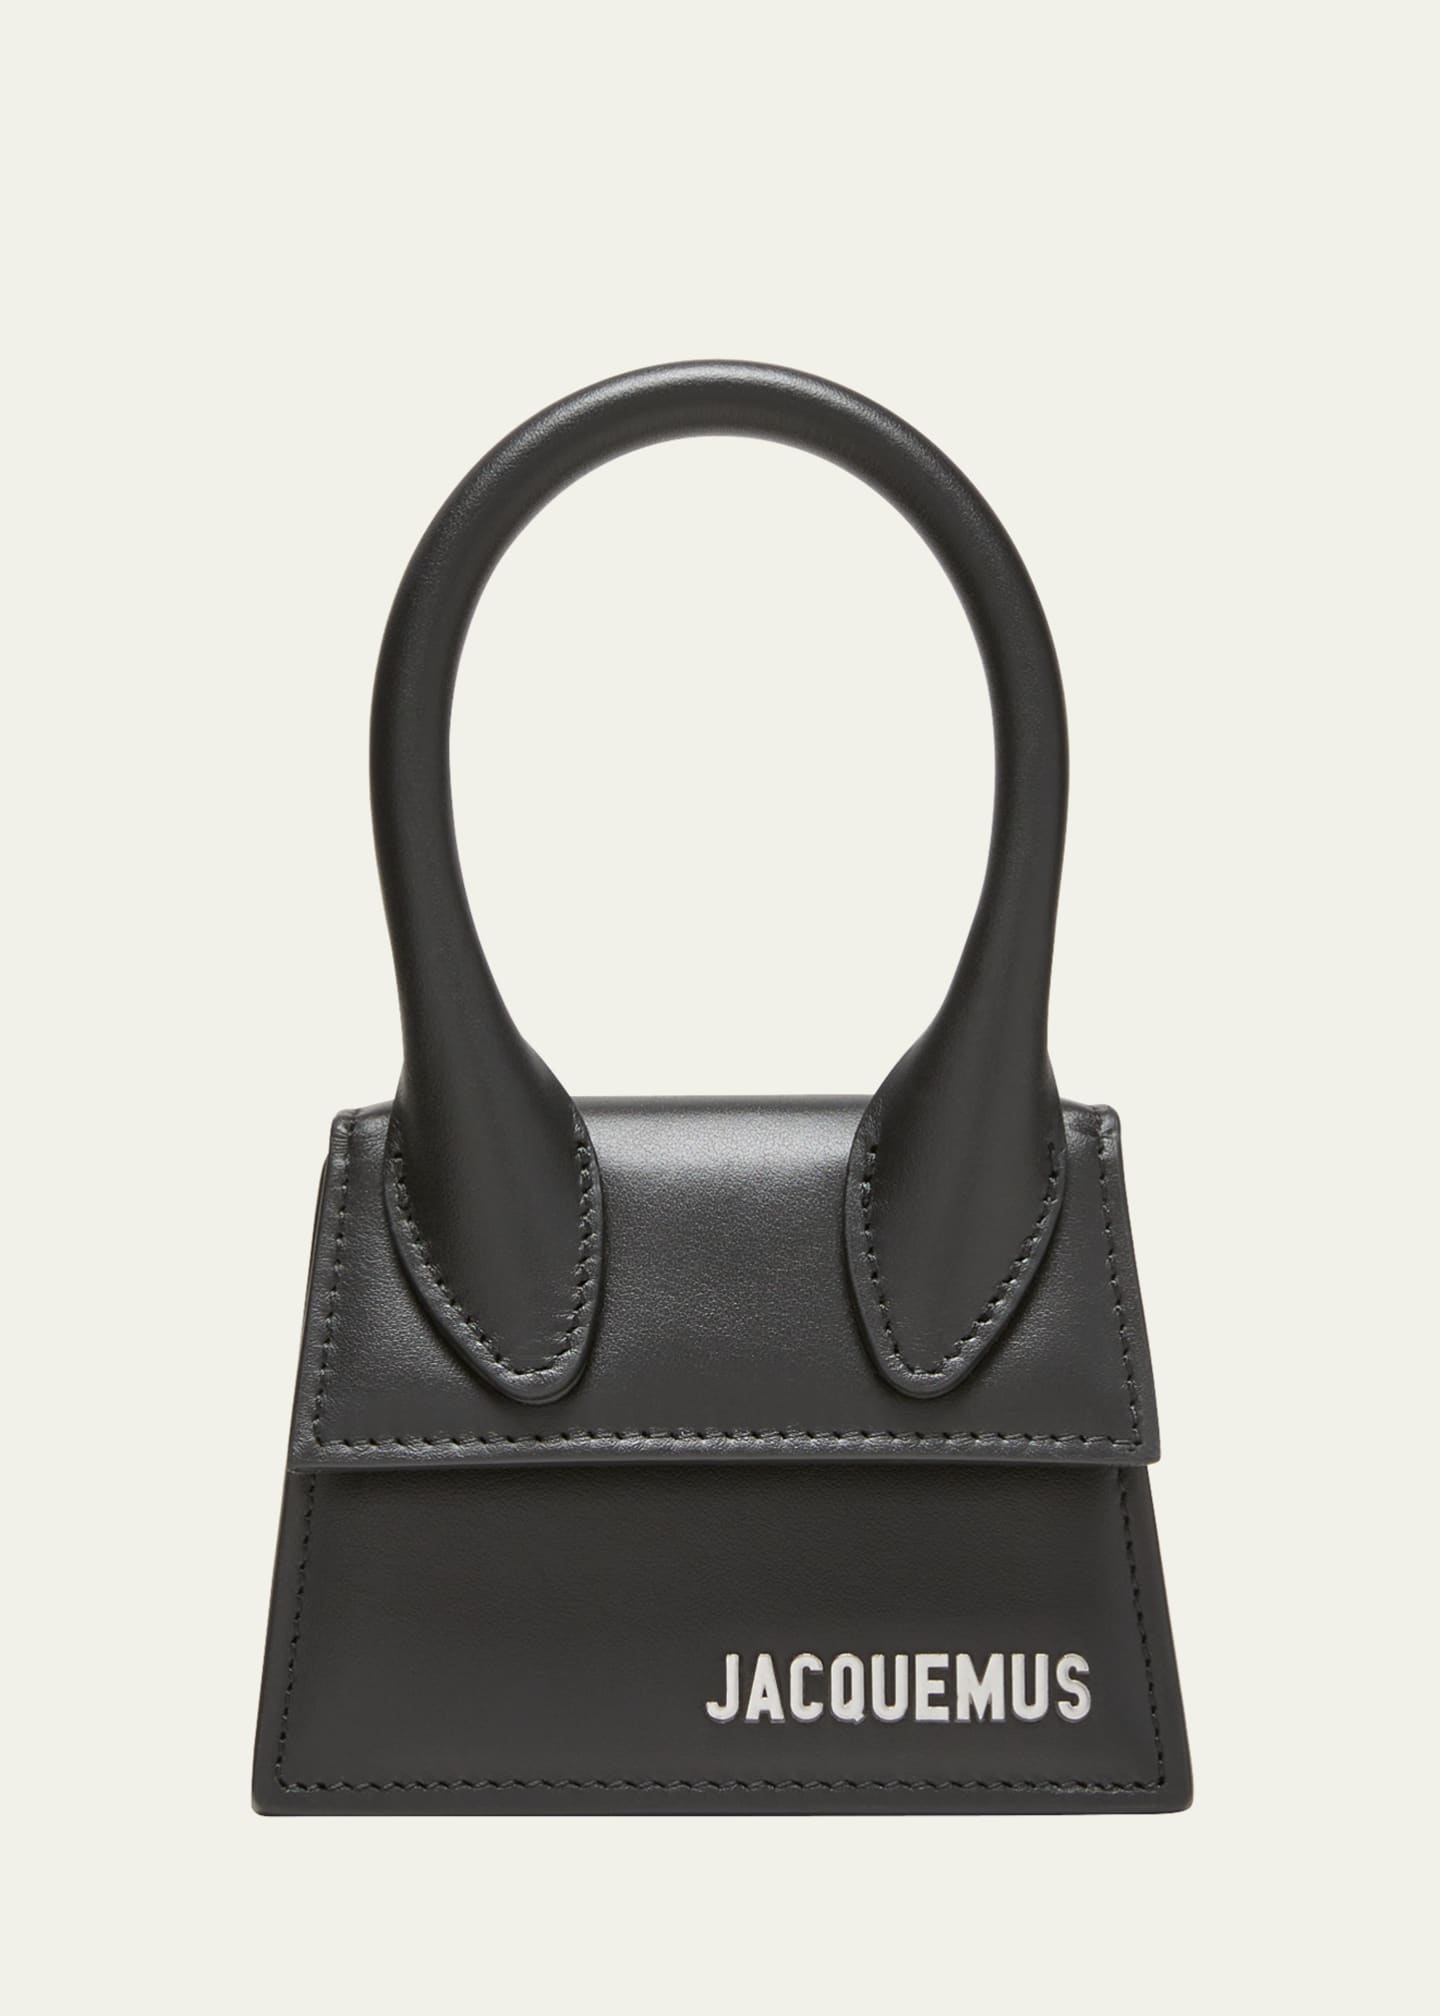 Jacquemus Le Chiquito Mini Leather Top Handle Bag